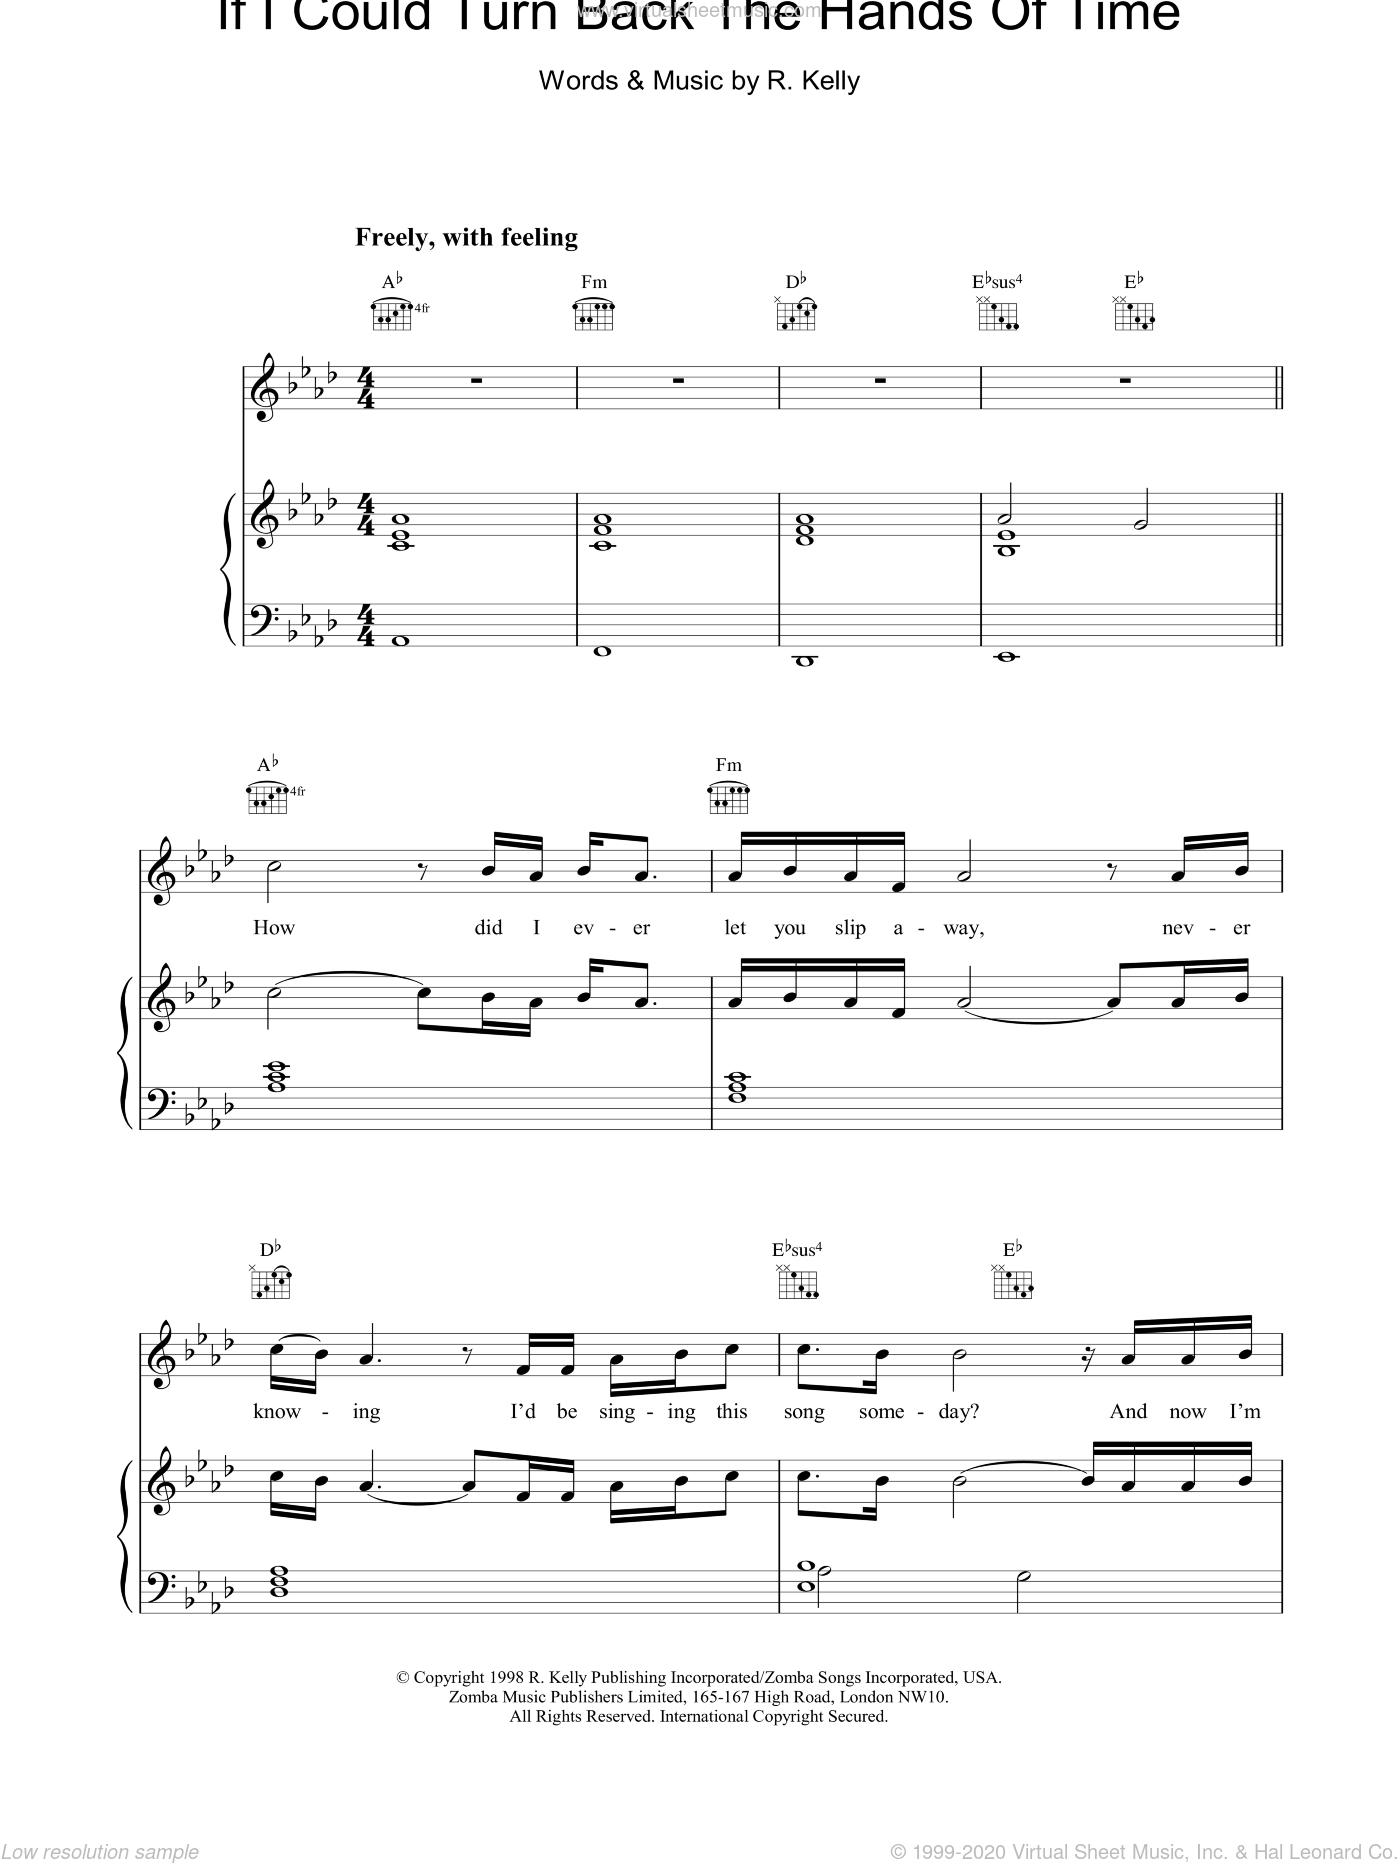 translate tab to sheet music